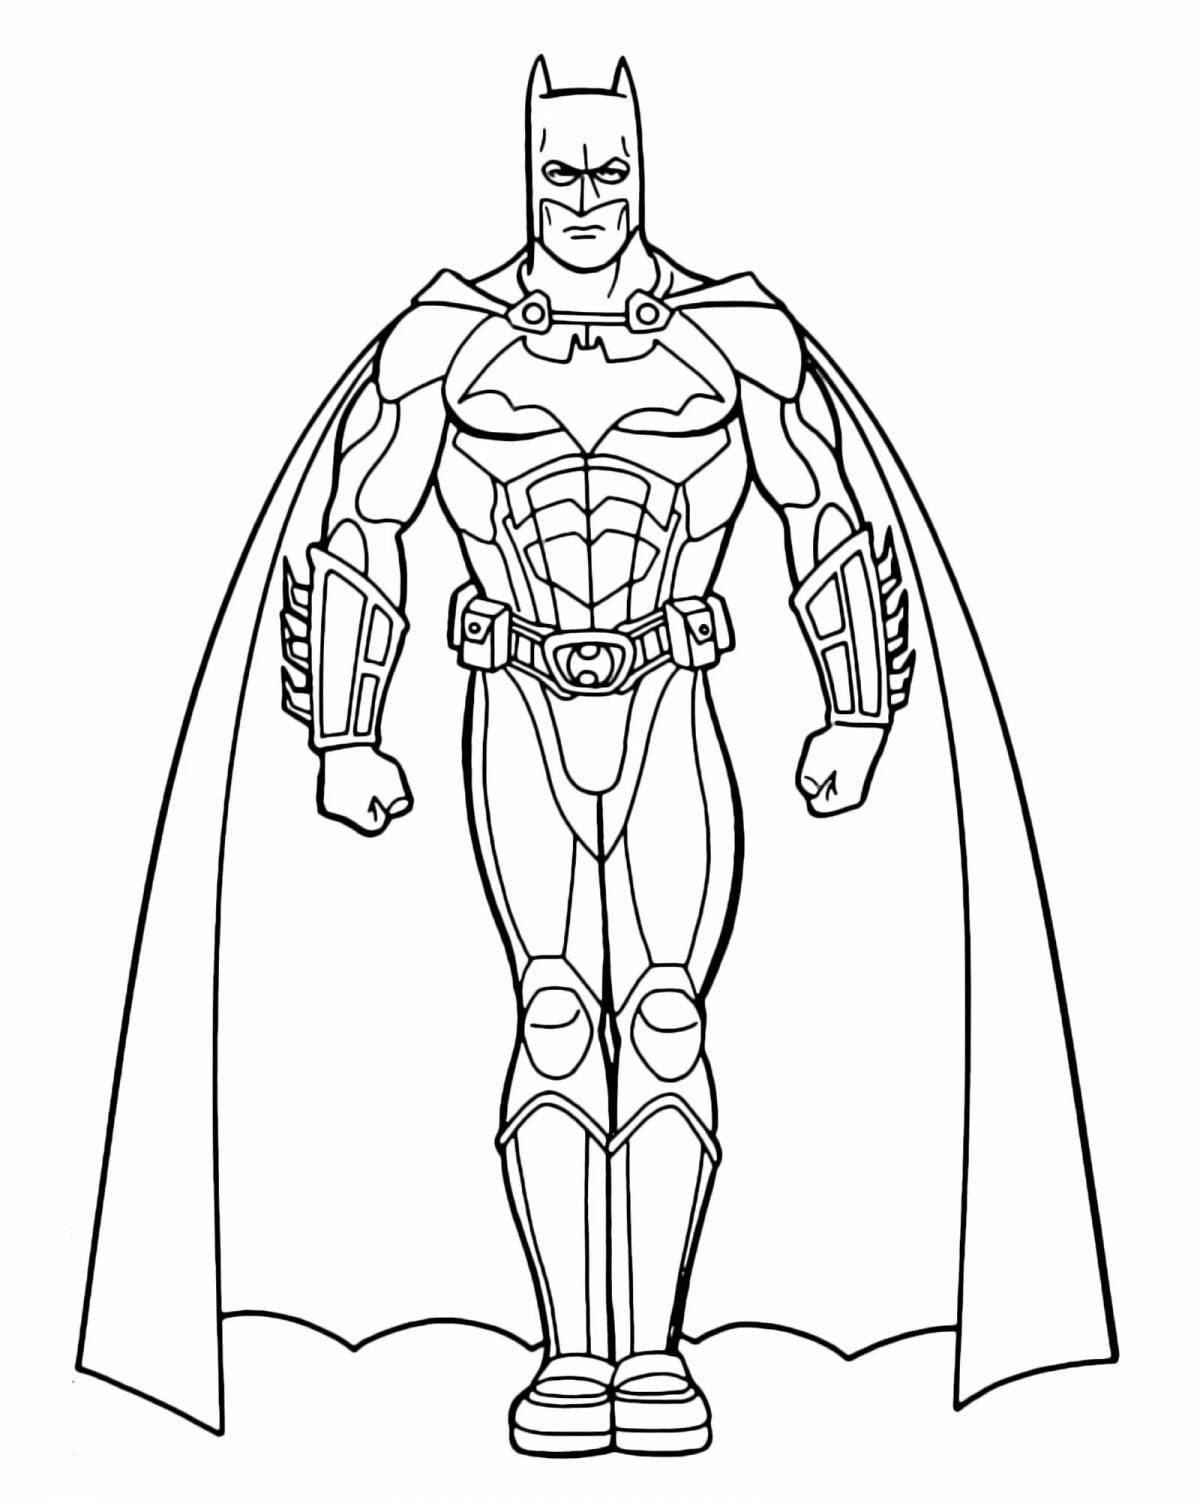 Fabulous Batman coloring page